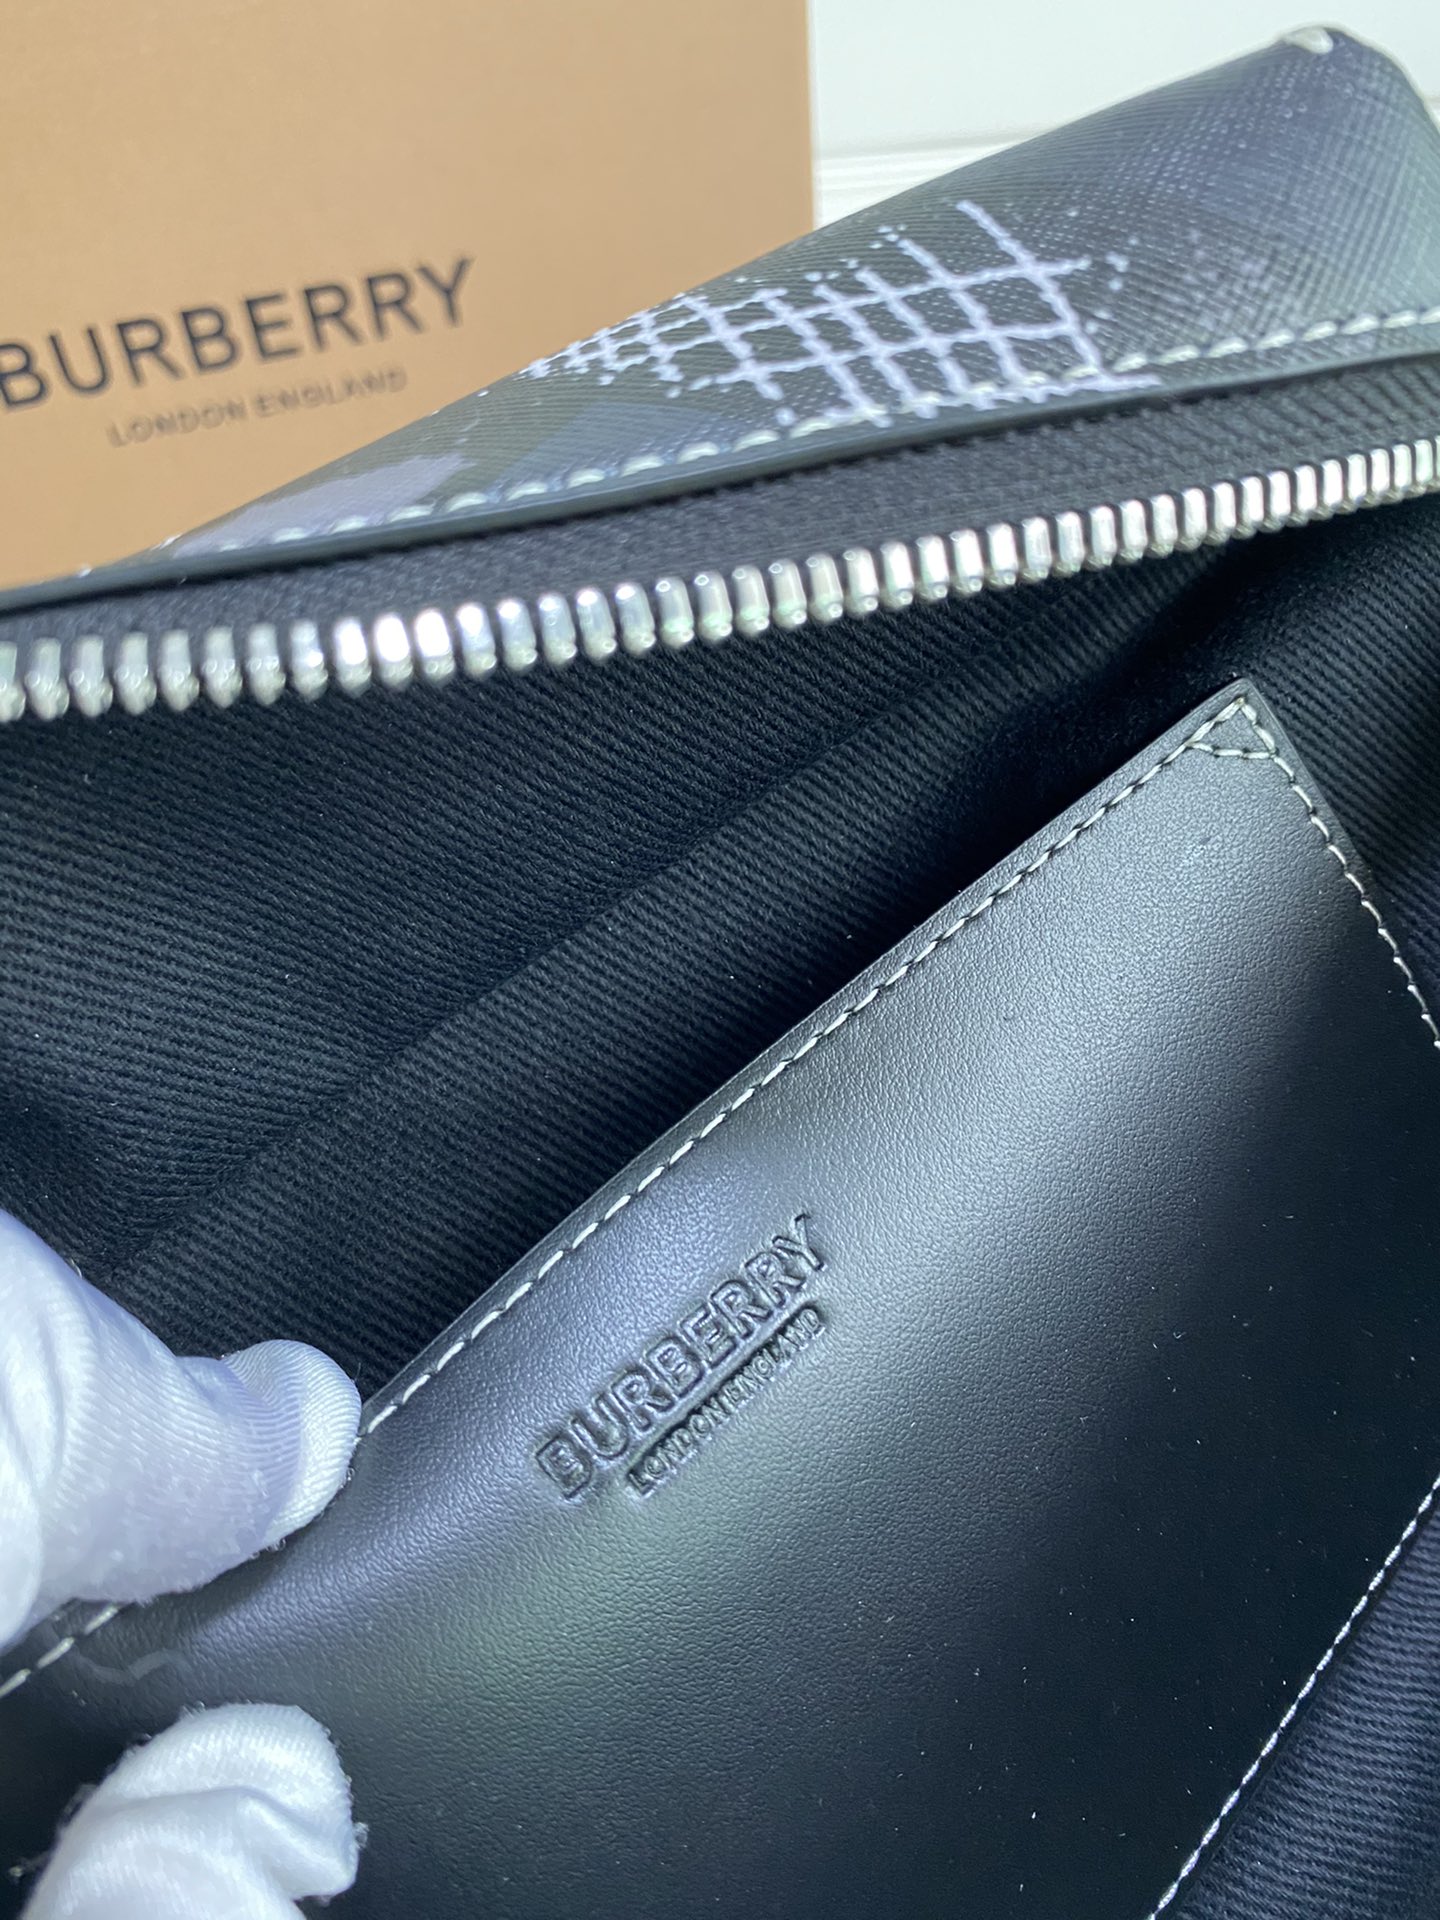 Burberry巴宝莉专属标识印花环保帆布胸包